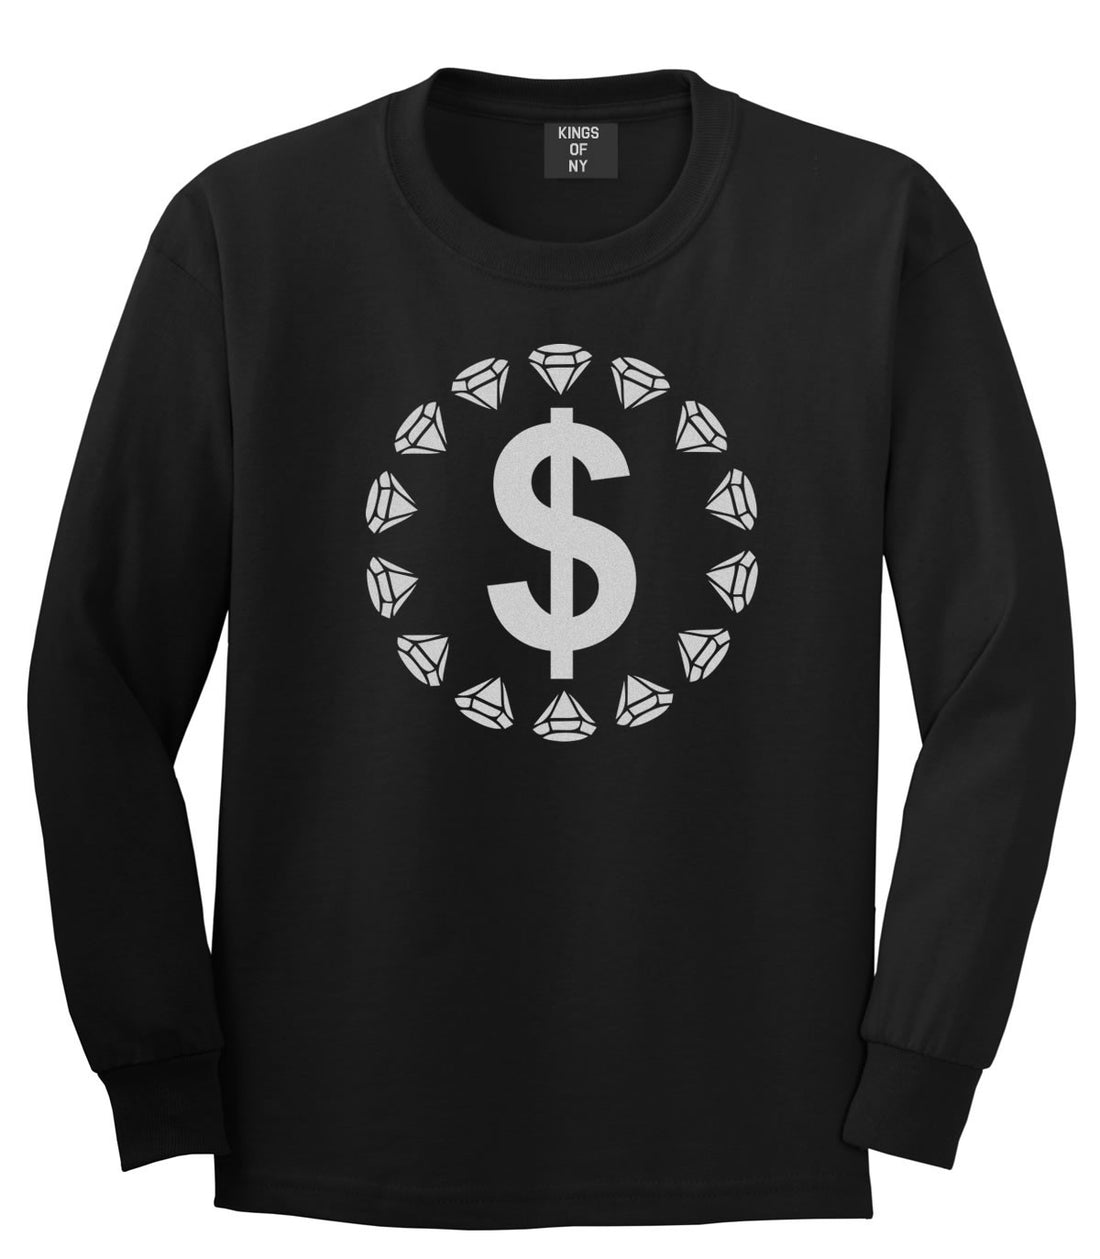 Diamonds Money Sign Logo Boys Kids Long Sleeve T-Shirt in Black by Kings Of NY